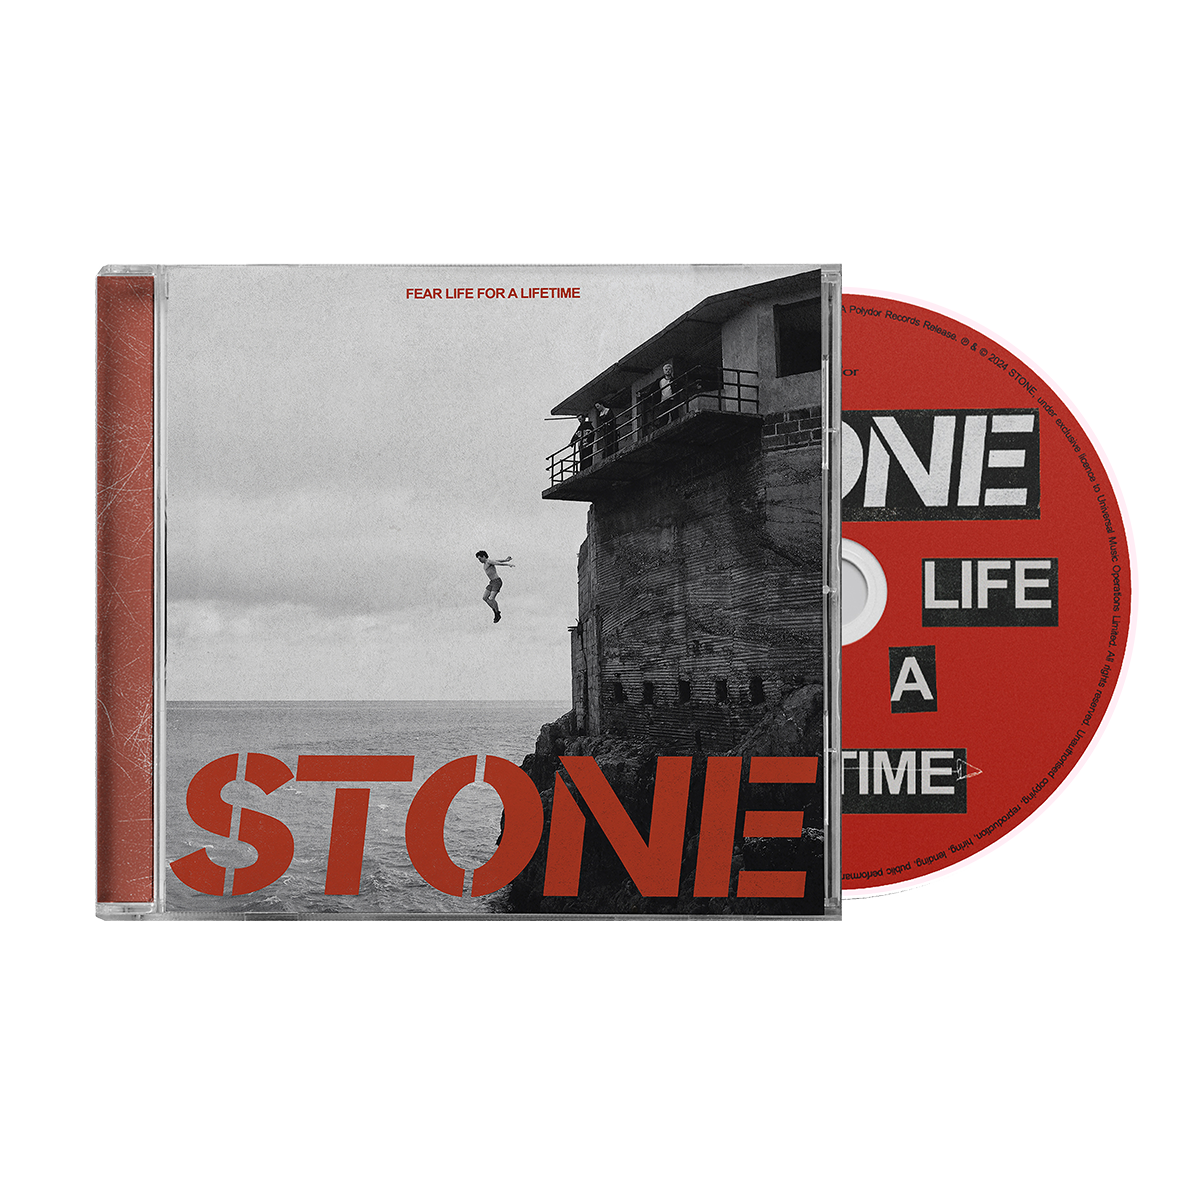 Fear Life For A Lifetime: CD + Cassette